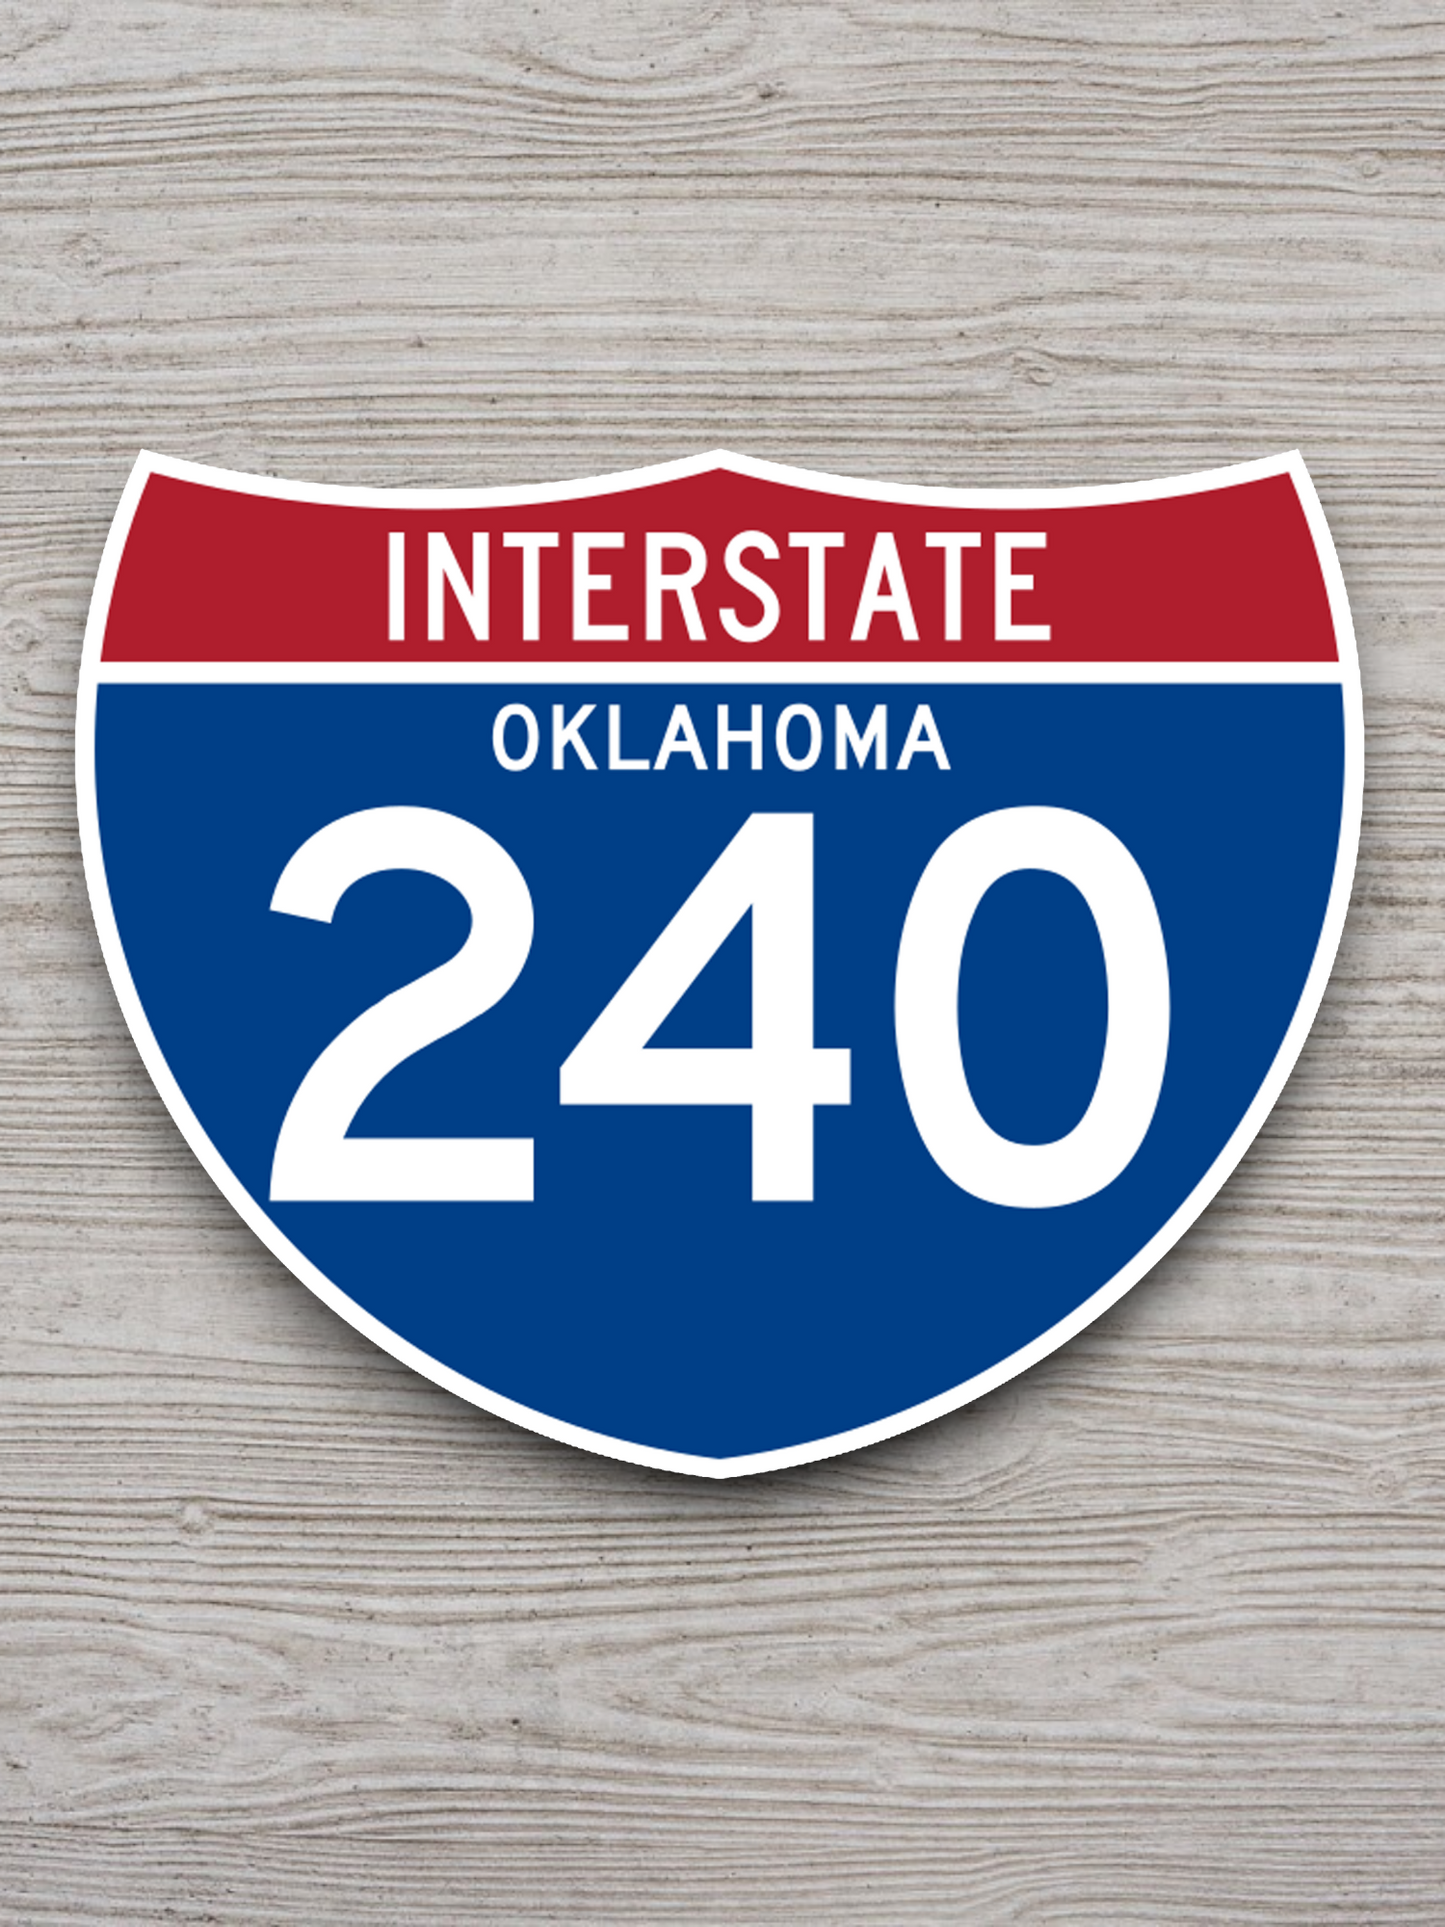 Interstate I-240 Oklahoma Road Sign Sticker